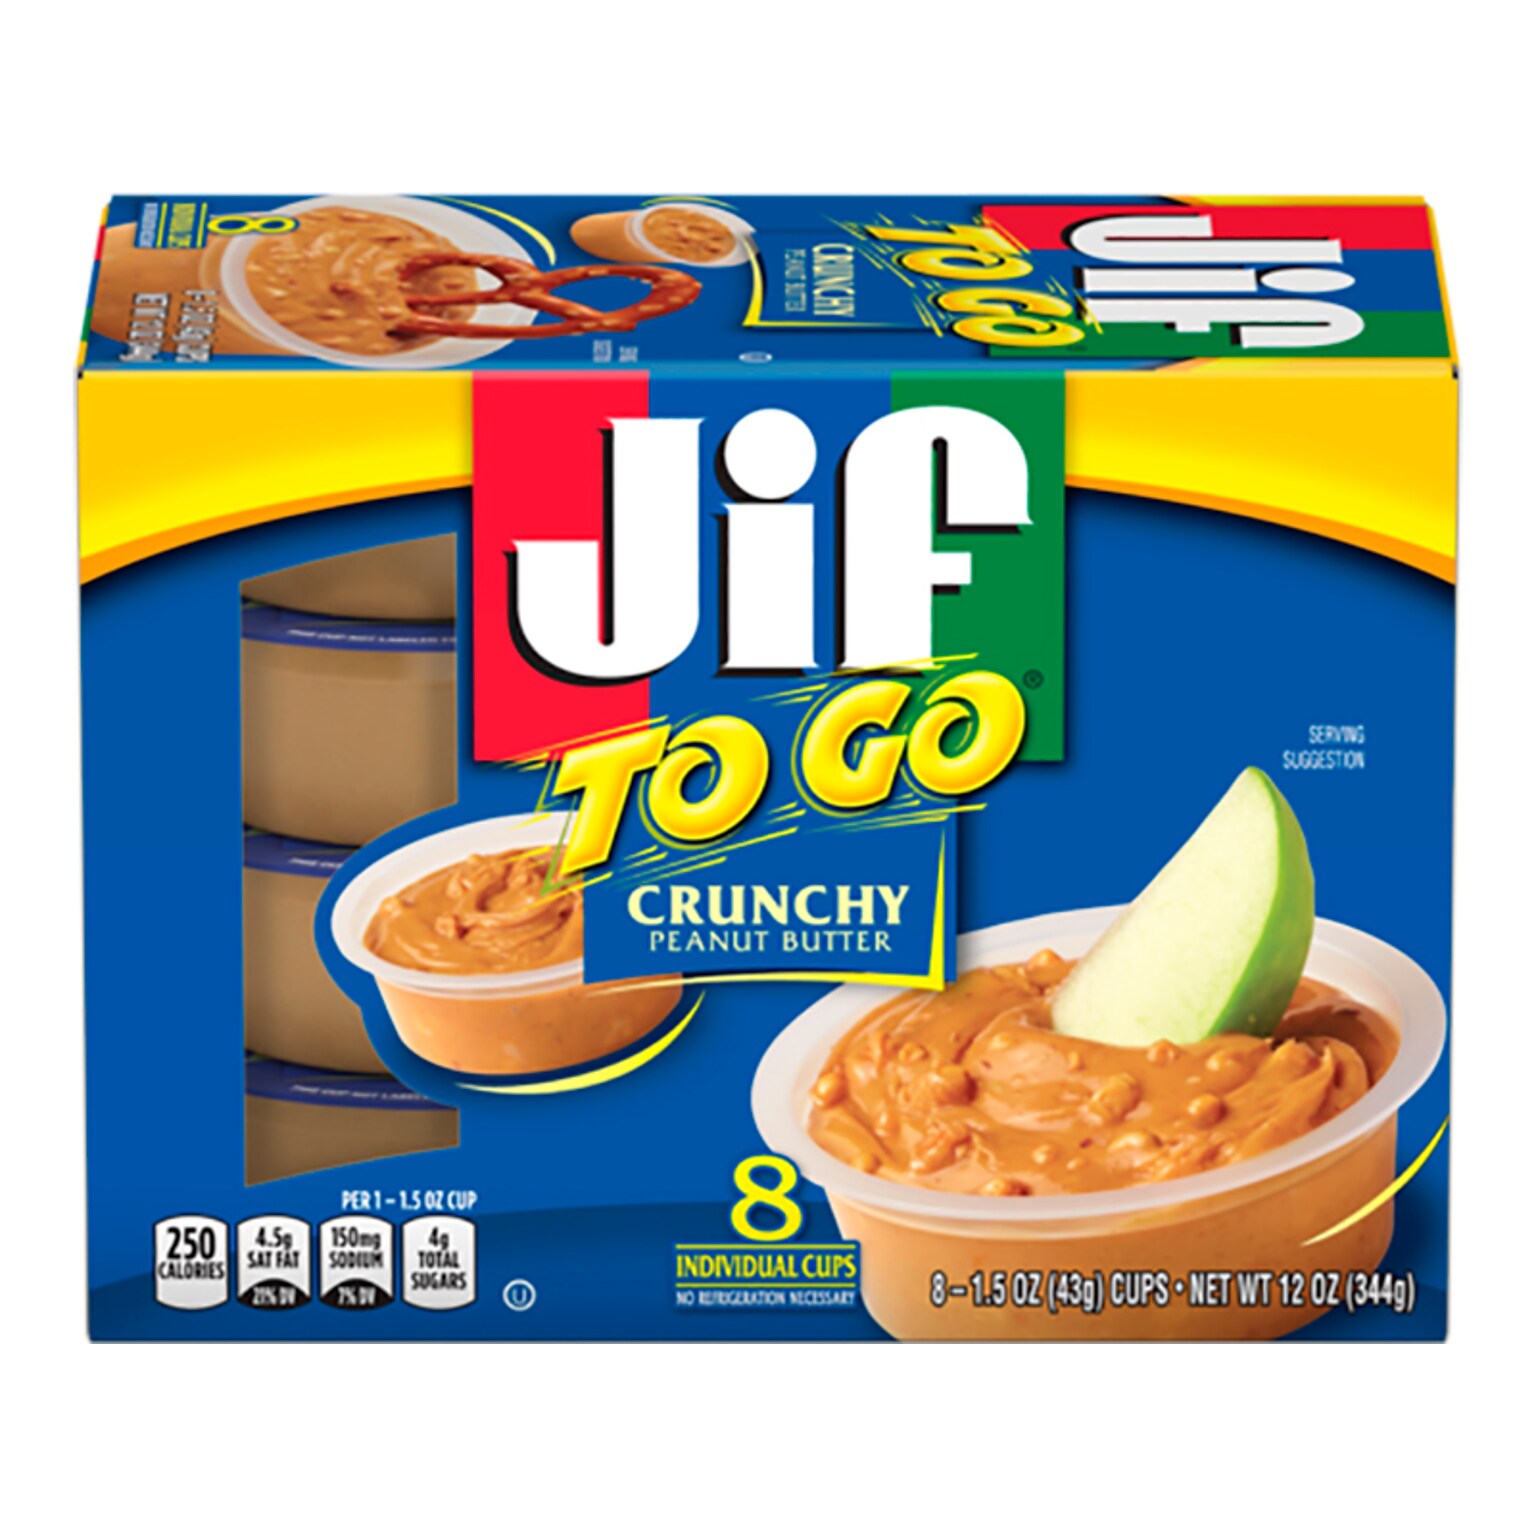 Jif To Go Crunchy Peanut Butter, 1.5 Oz., 8/Box (5150024130)